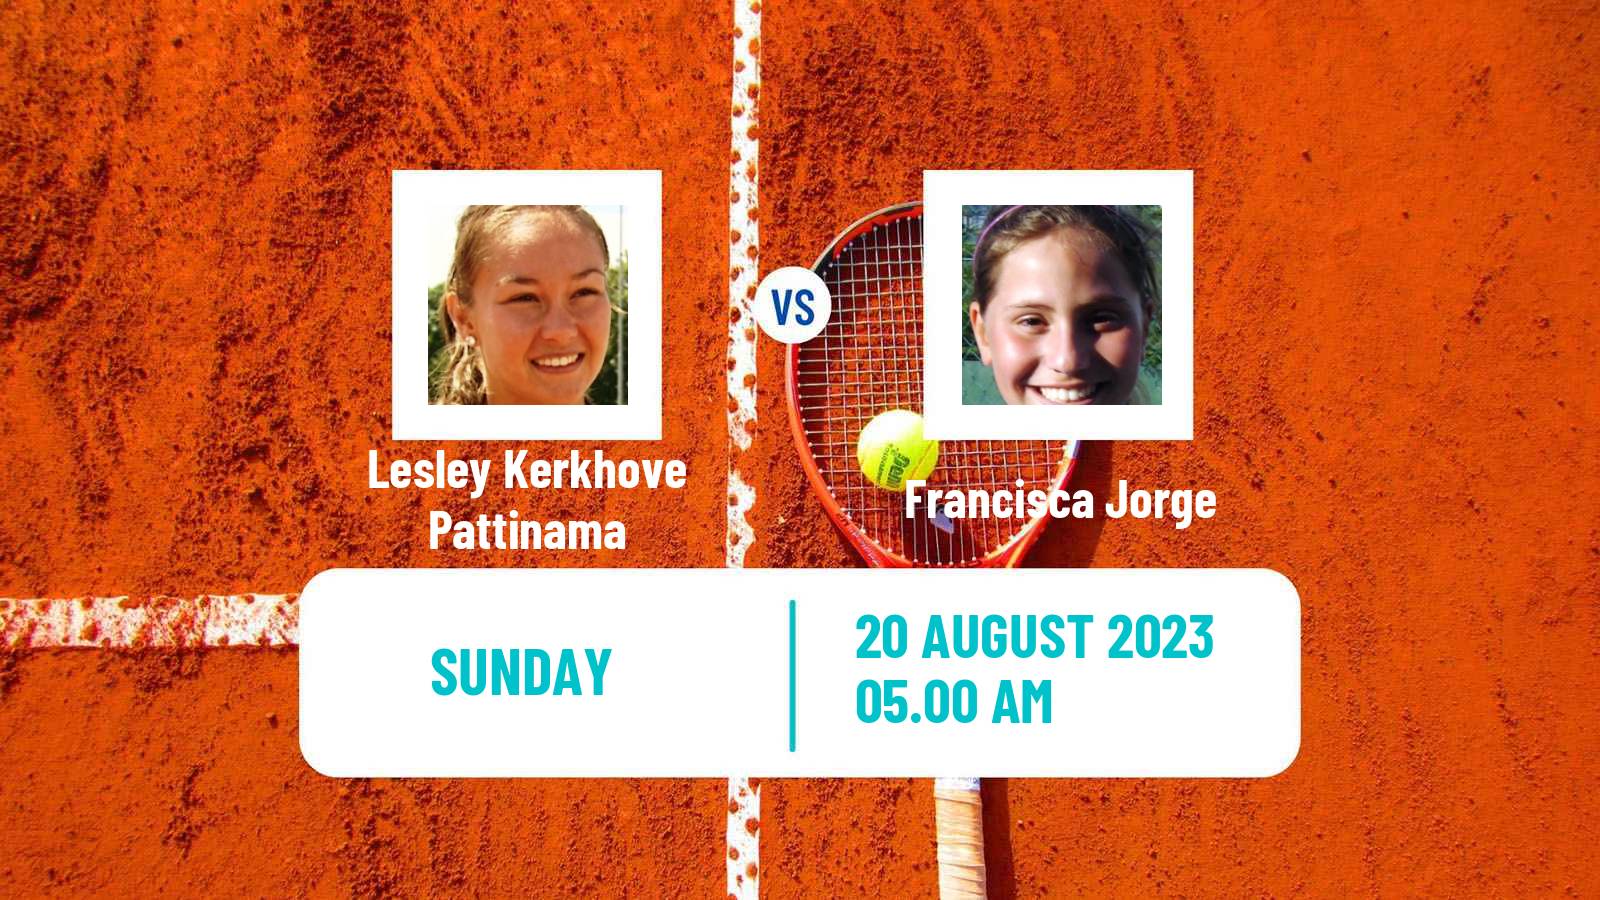 Tennis ITF W25 Ourense Women Lesley Kerkhove Pattinama - Francisca Jorge